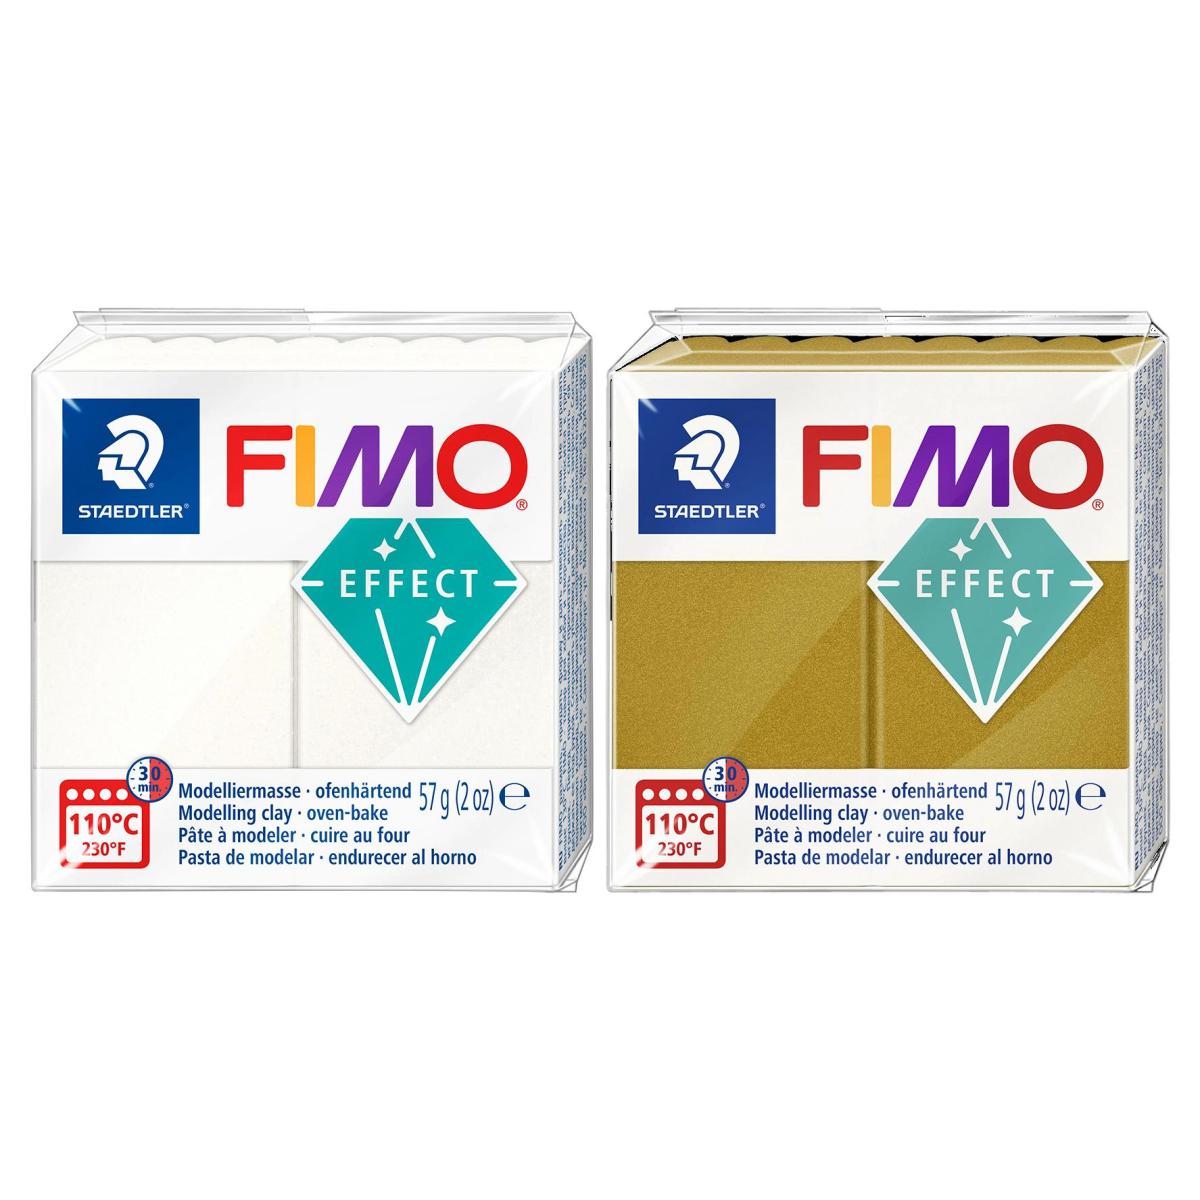 FIMO Mod.masse Fimo effect bordeaux metallic 8010-21 (4007817141090)